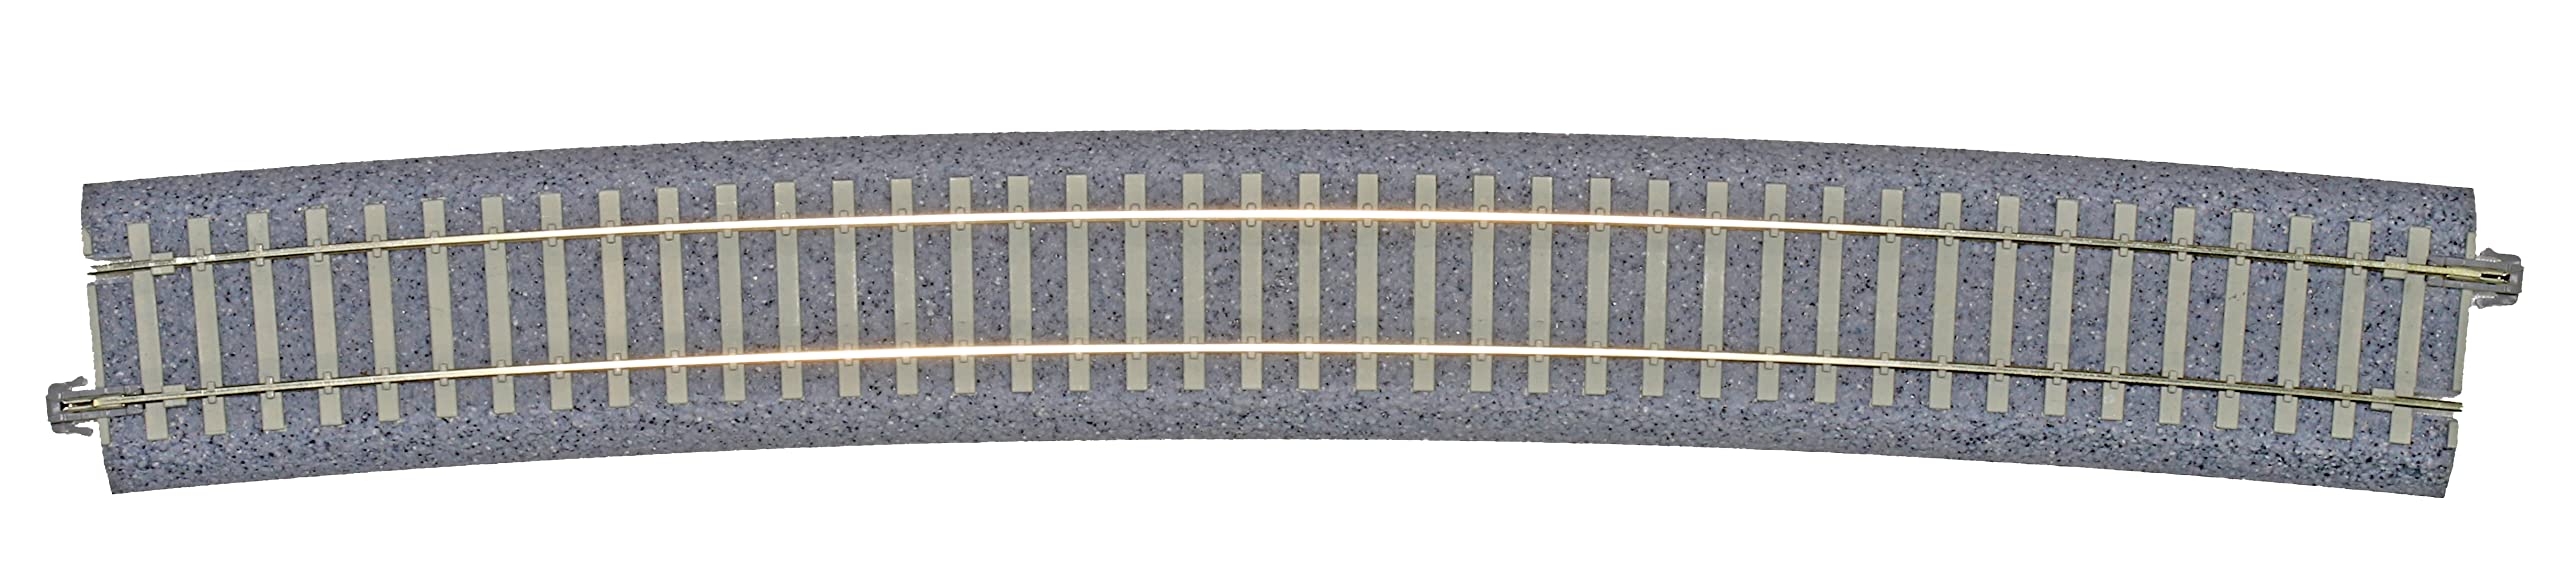 KATO 2-331 Betonschwelle mit großem Radius, gebogenes Gleis R1606 mm, 63 1/4 Zoll, 11,25, 4 Stück, Ho-Skala